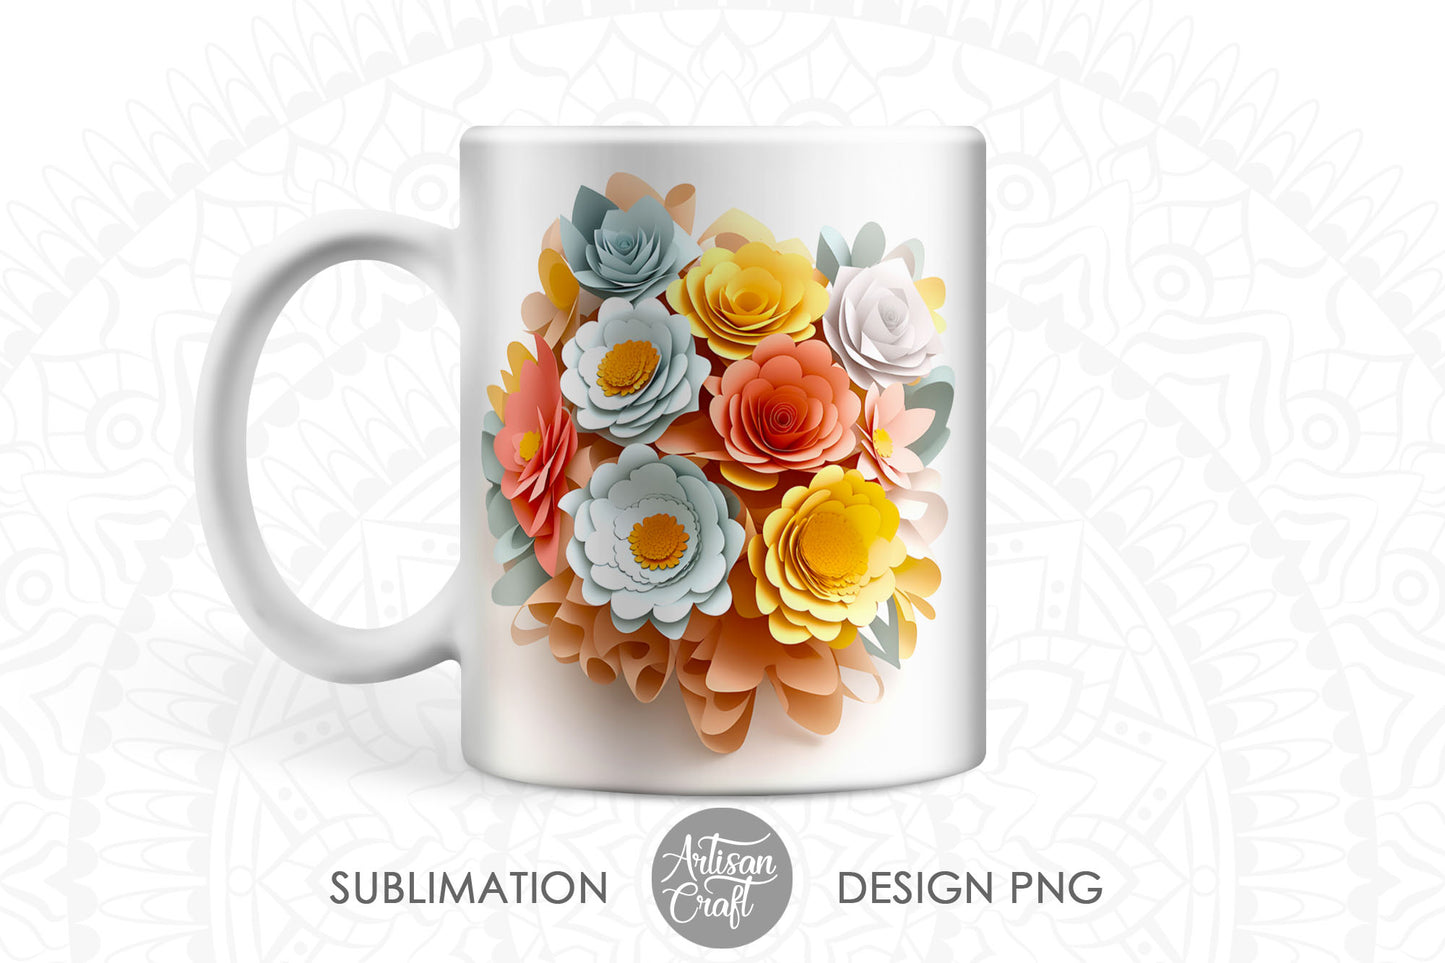 3D Floral mug, 3D paper flowers, 11oz mug template,